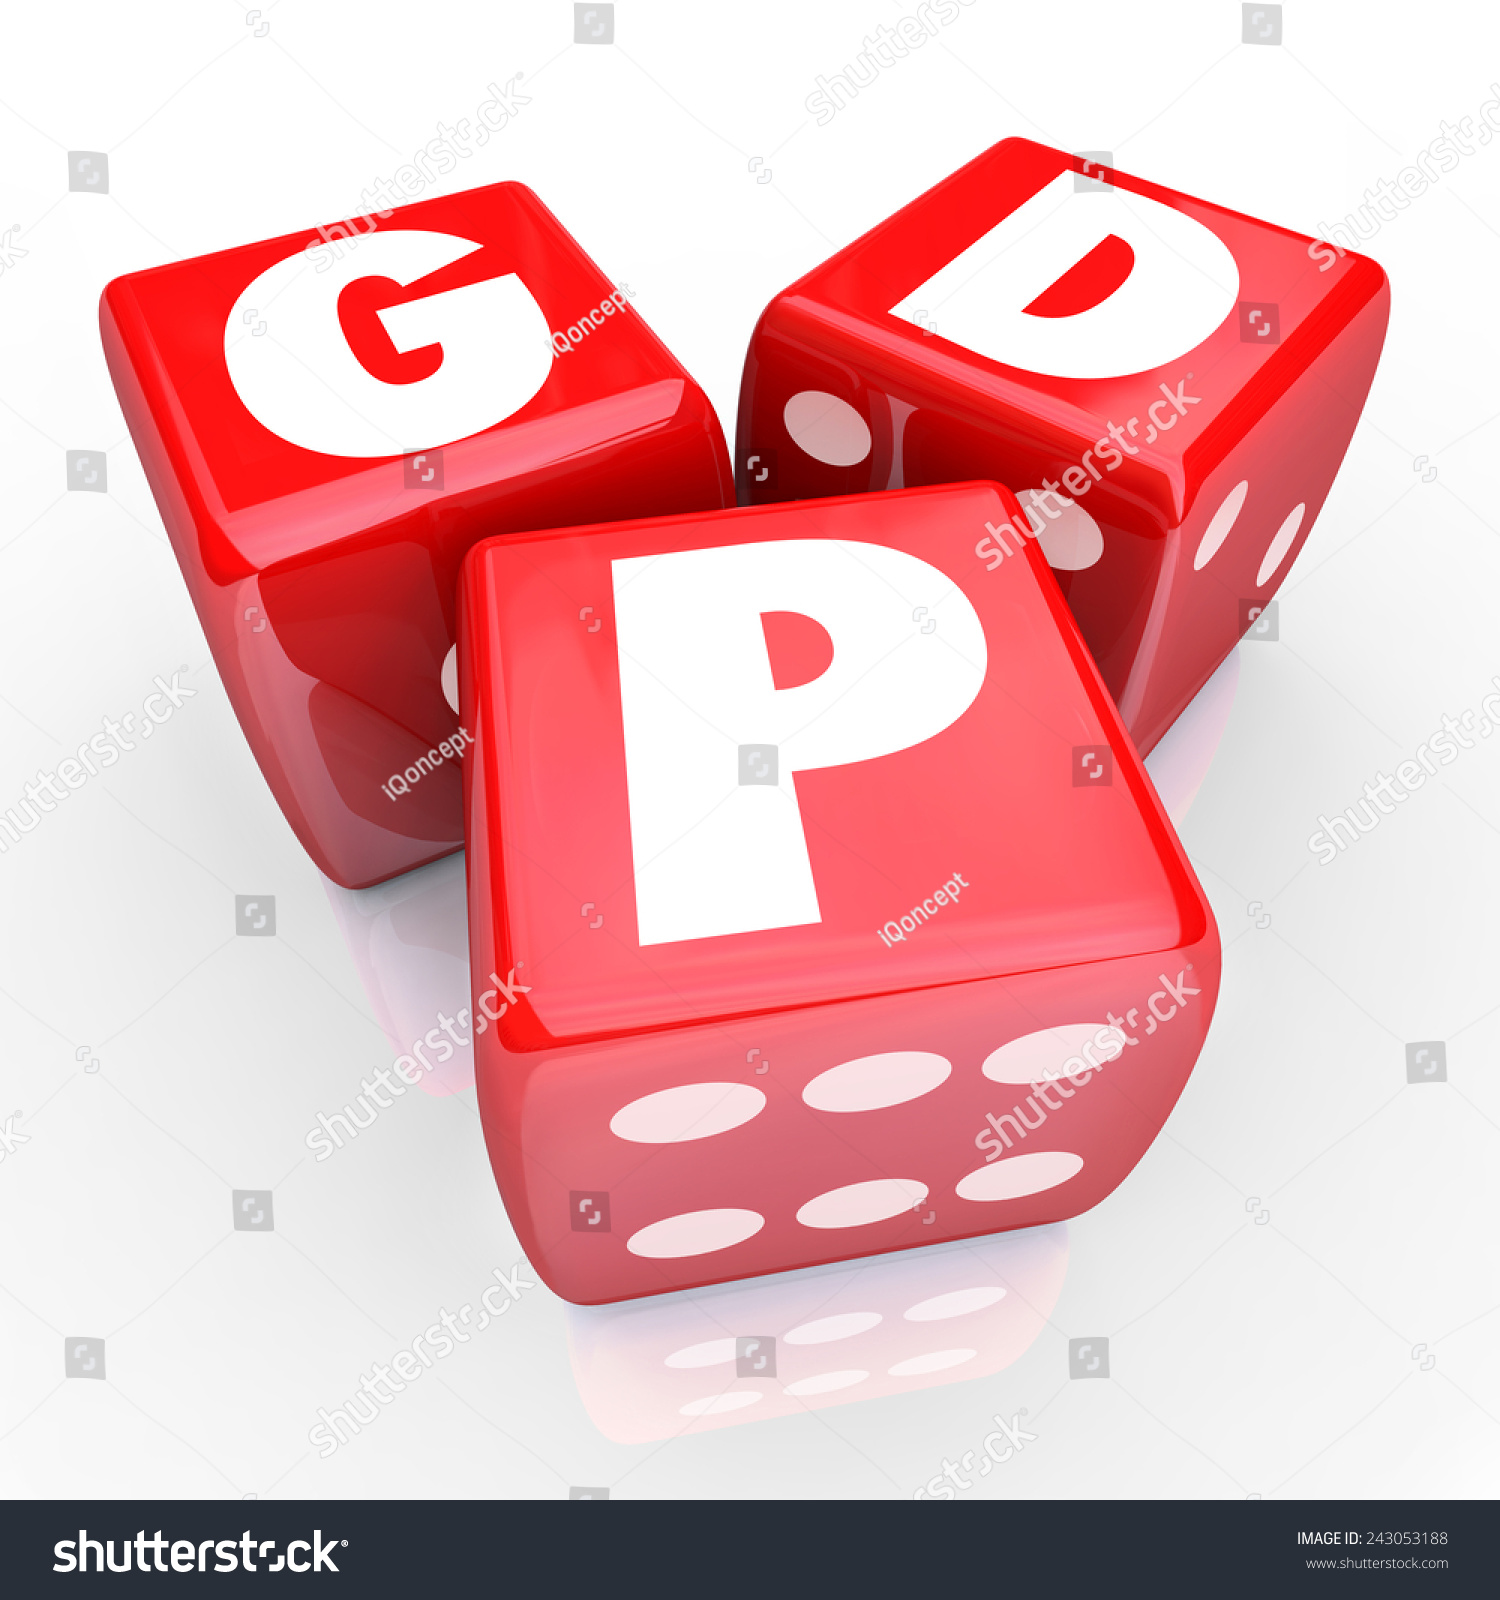 Domesic生产总值GDP字母三个红色骰子来说